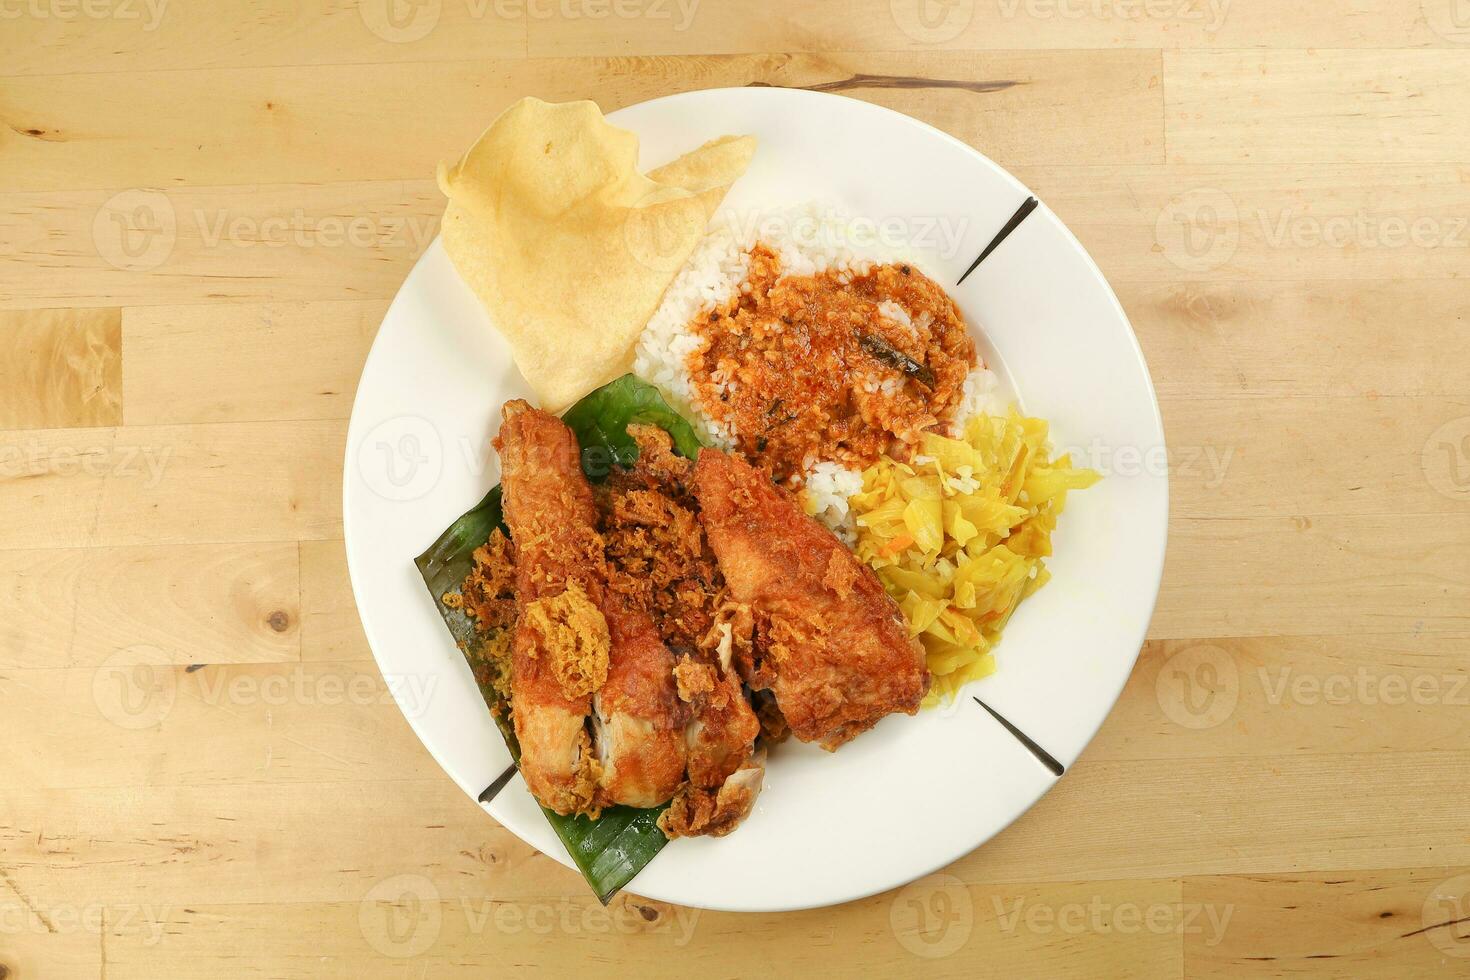 tradicional malasio indio comida blanco arroz repollo vegetal carne profundo frito Cortado pollo pierna coronado arriba con picante mezcla salsa madera mesa antecedentes foto